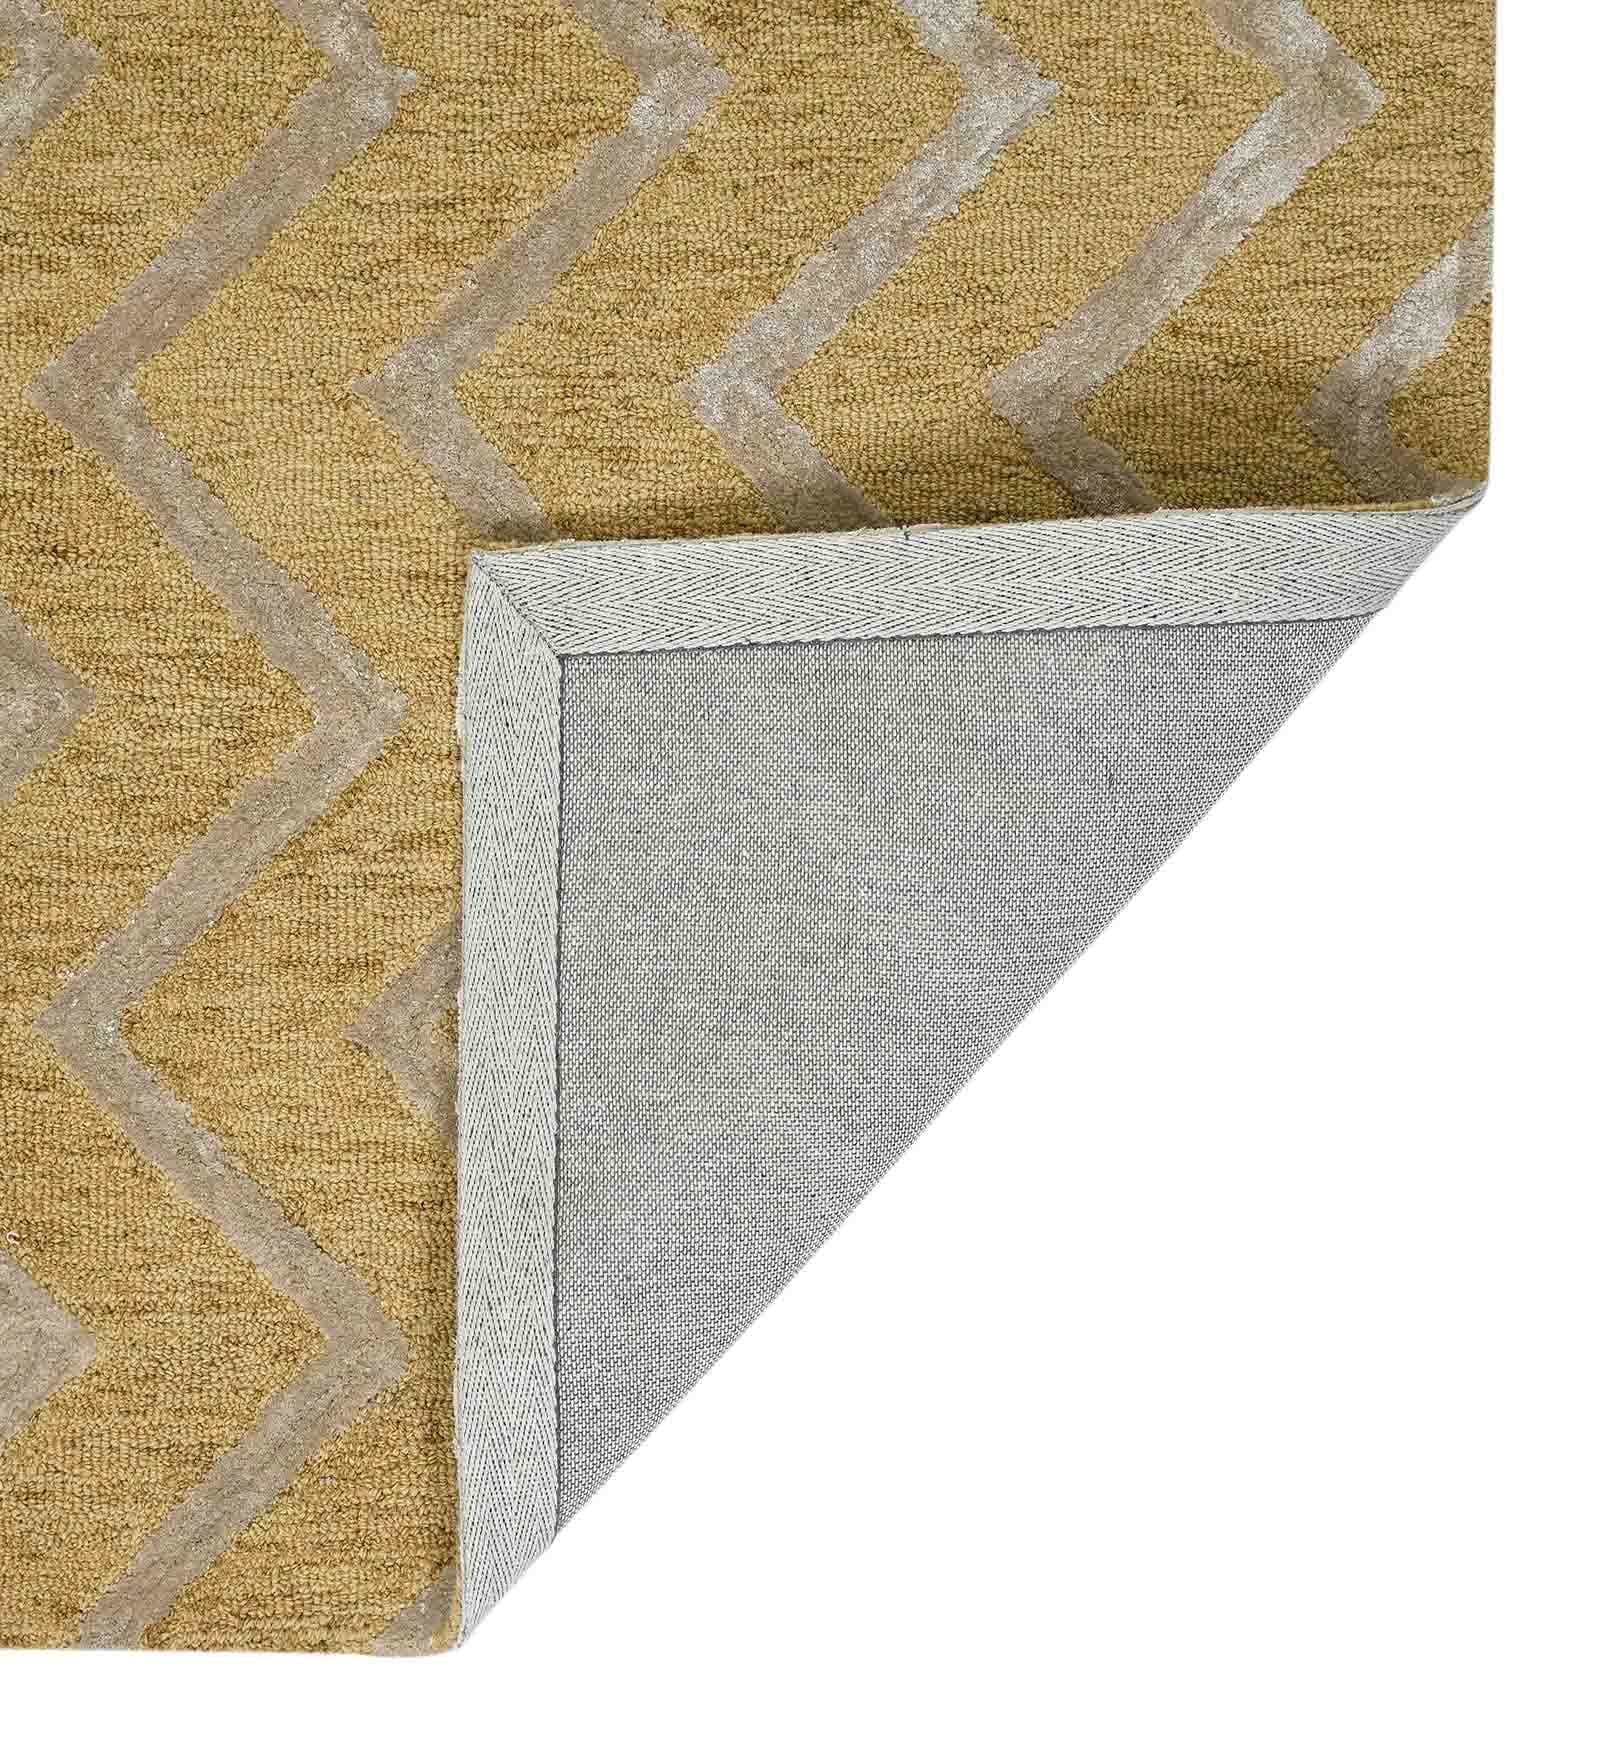 GOLD Wool & Viscose Canyan 8x10 Feet  Hand-Tufted Carpet - Rug